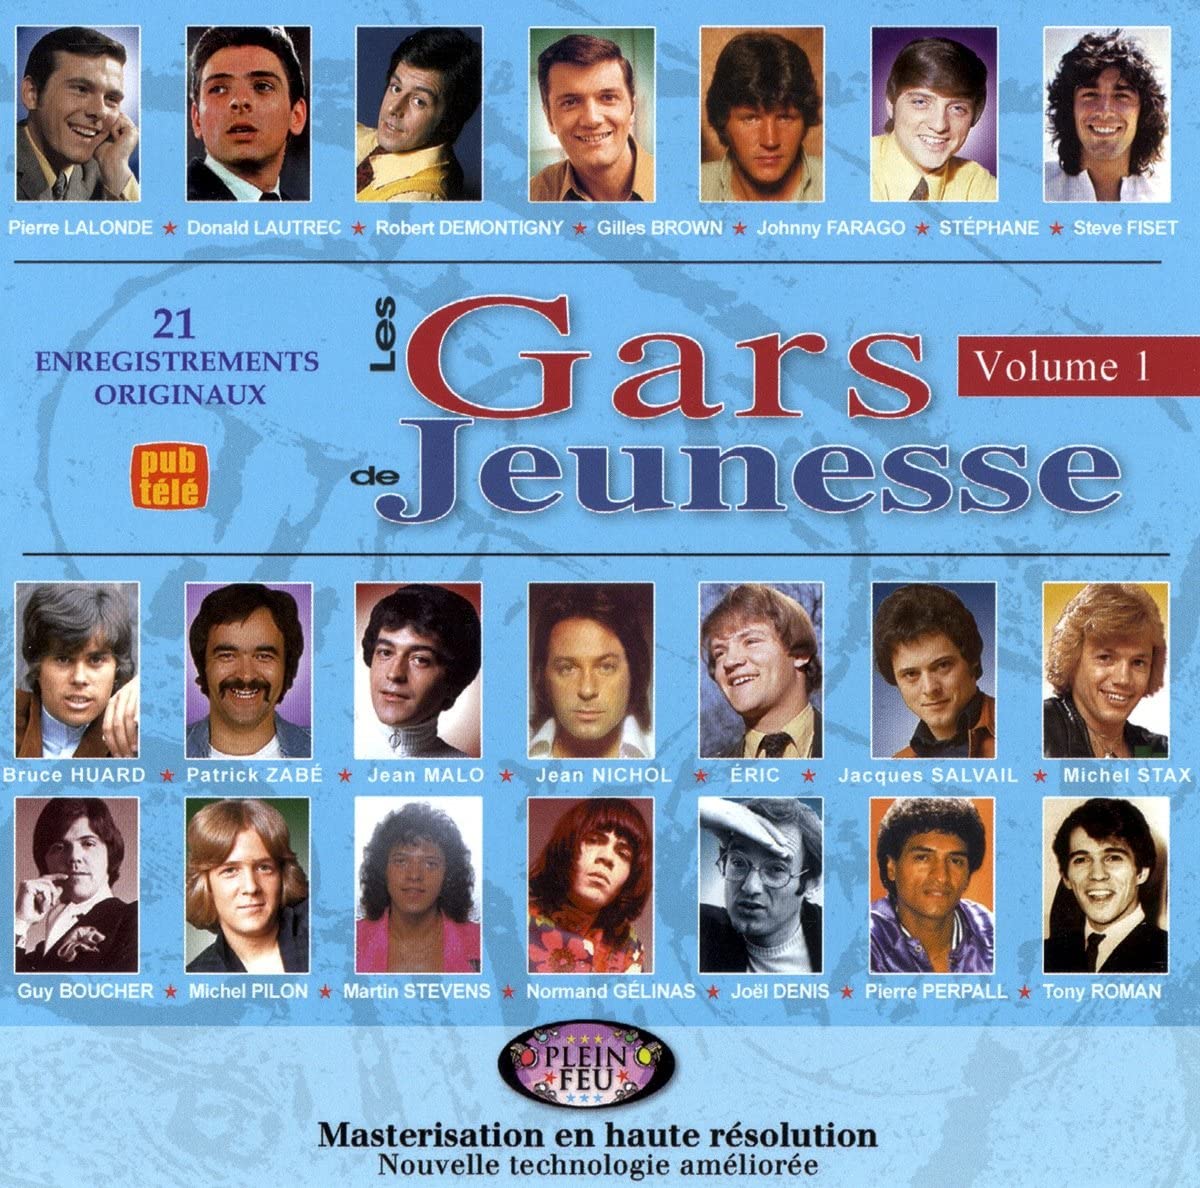 Les Gars de Jeunesse Volume 1 [Audio CD] Aristes Varies